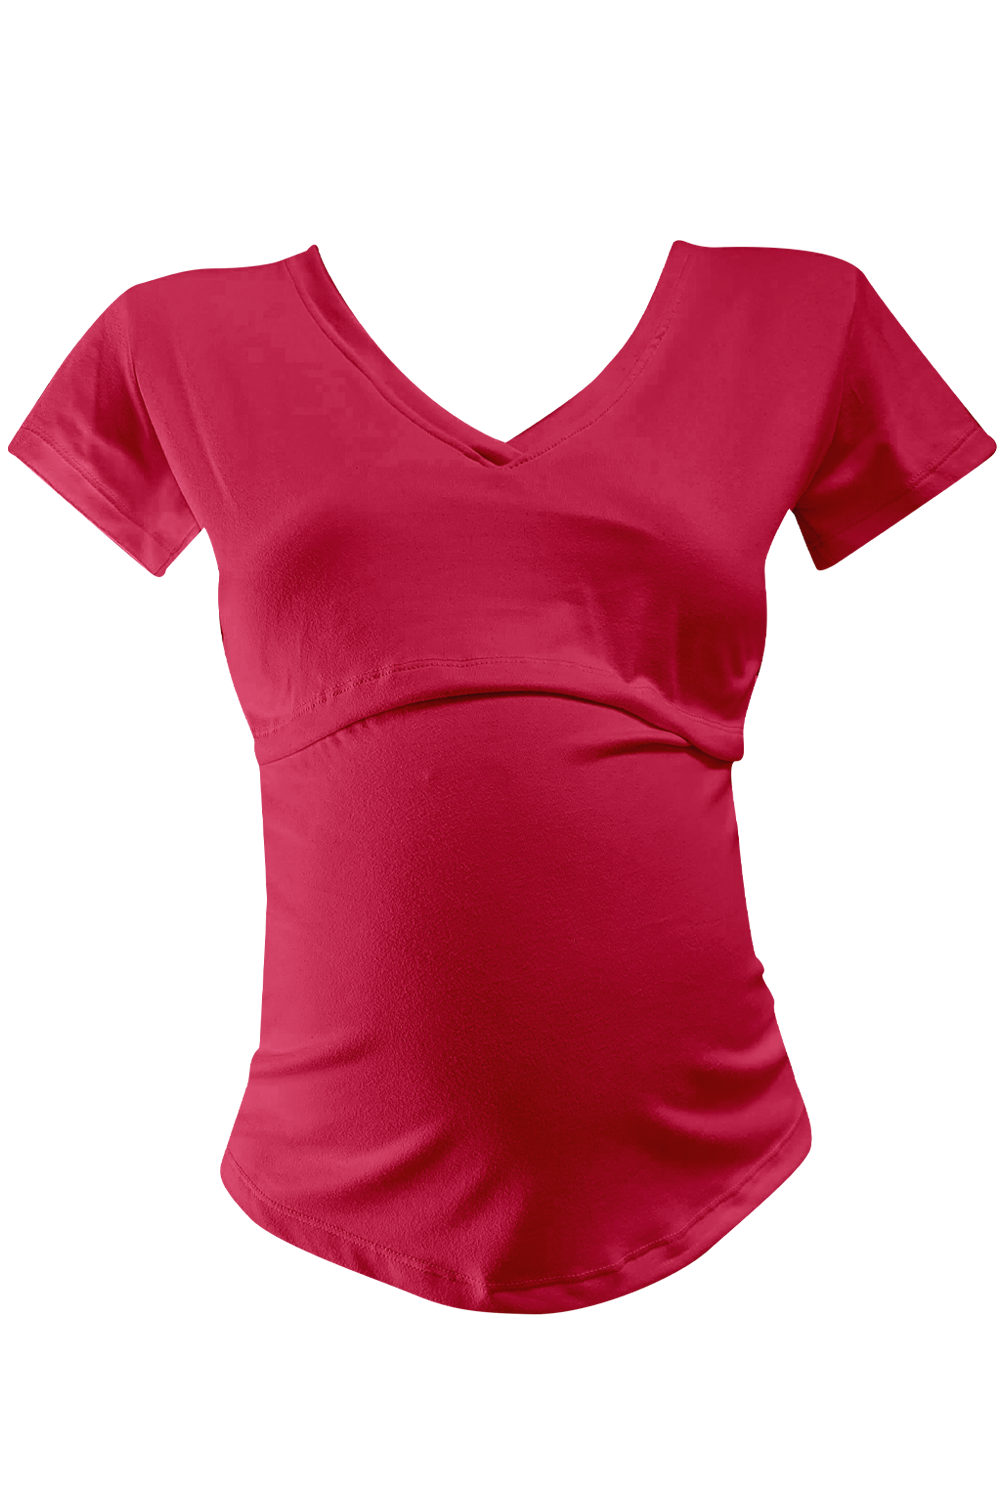 Blusa cuello V maternidad-lactancia. Rojo